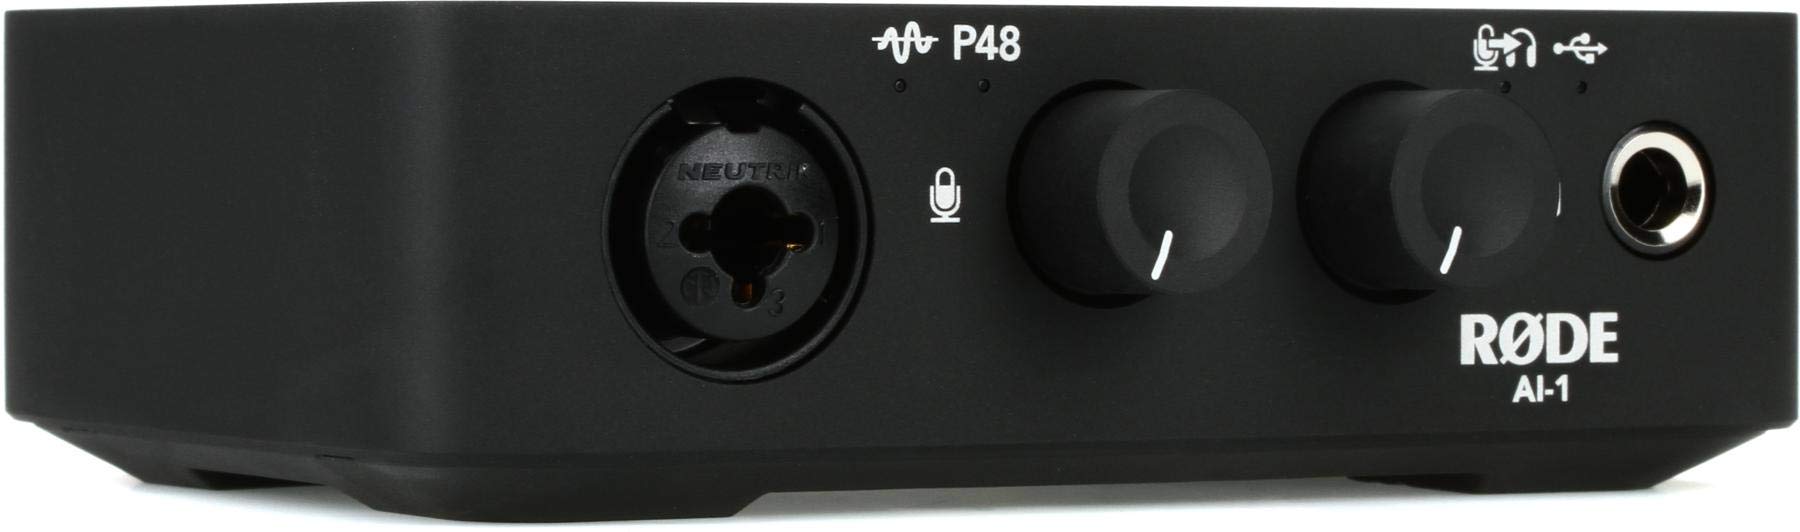 Rode AI-1 USB Audio Interface - USB Audio Interface